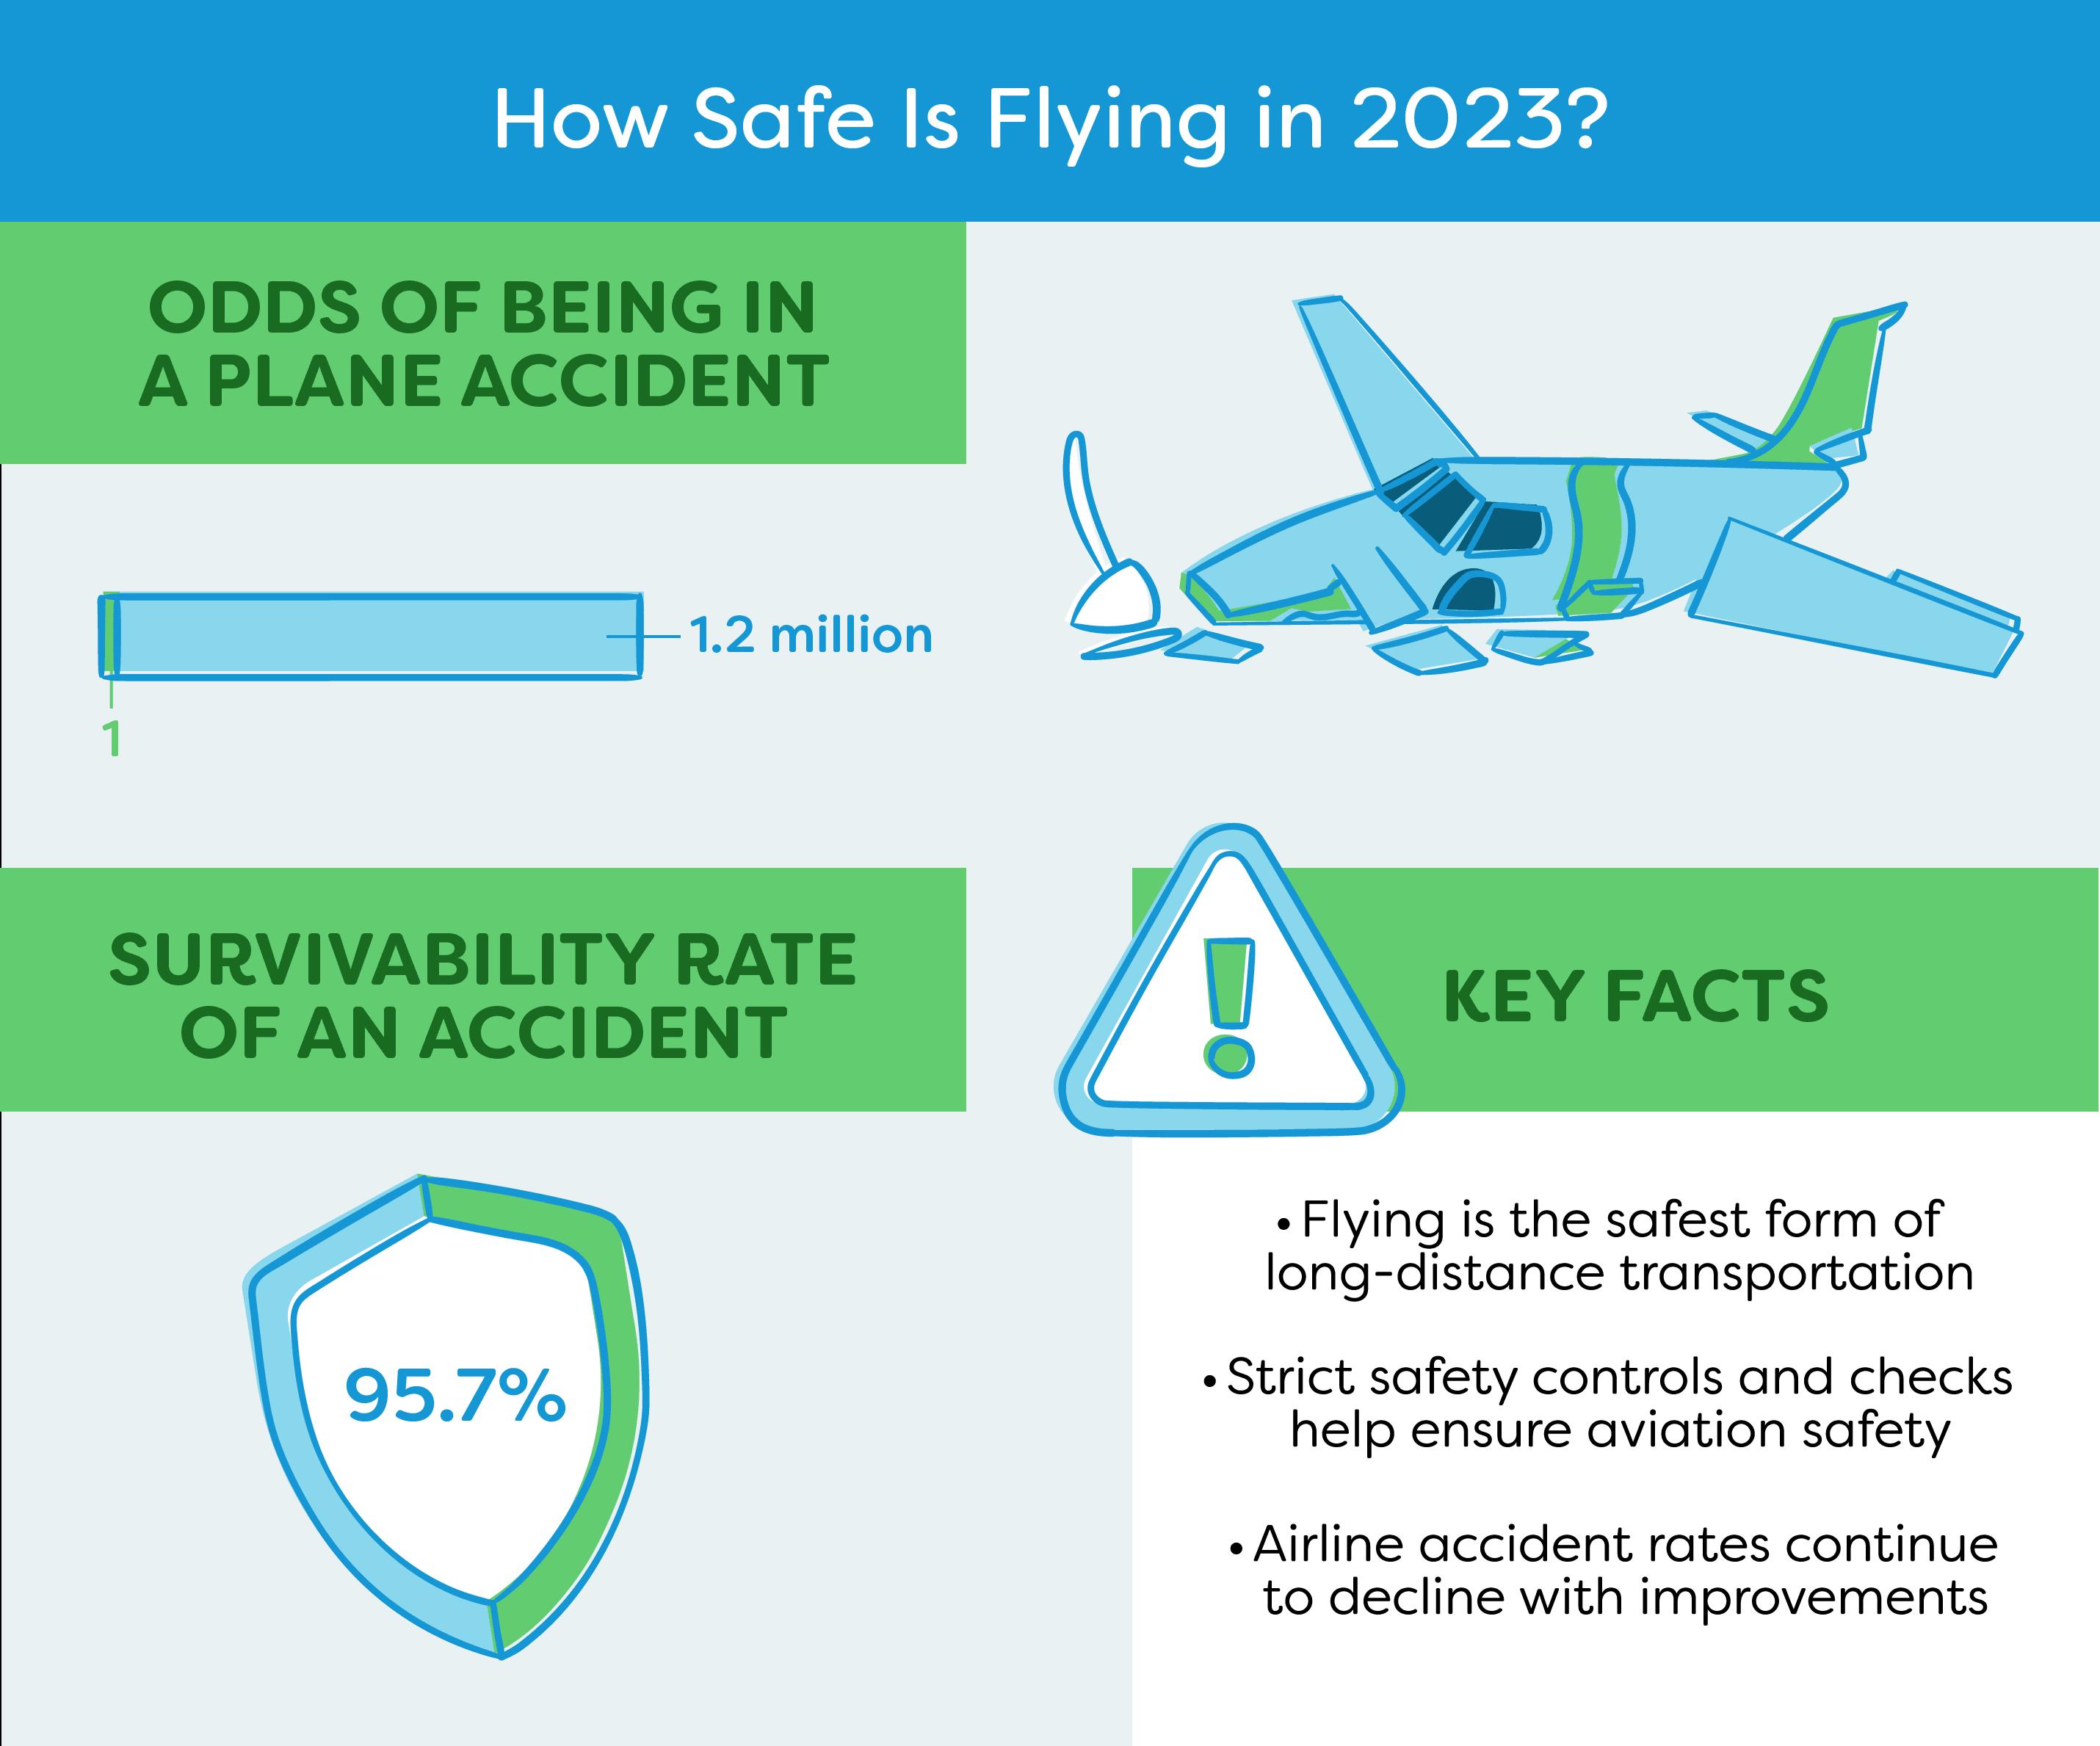 Remote Car Aeroplane: Essential Safety Considerations